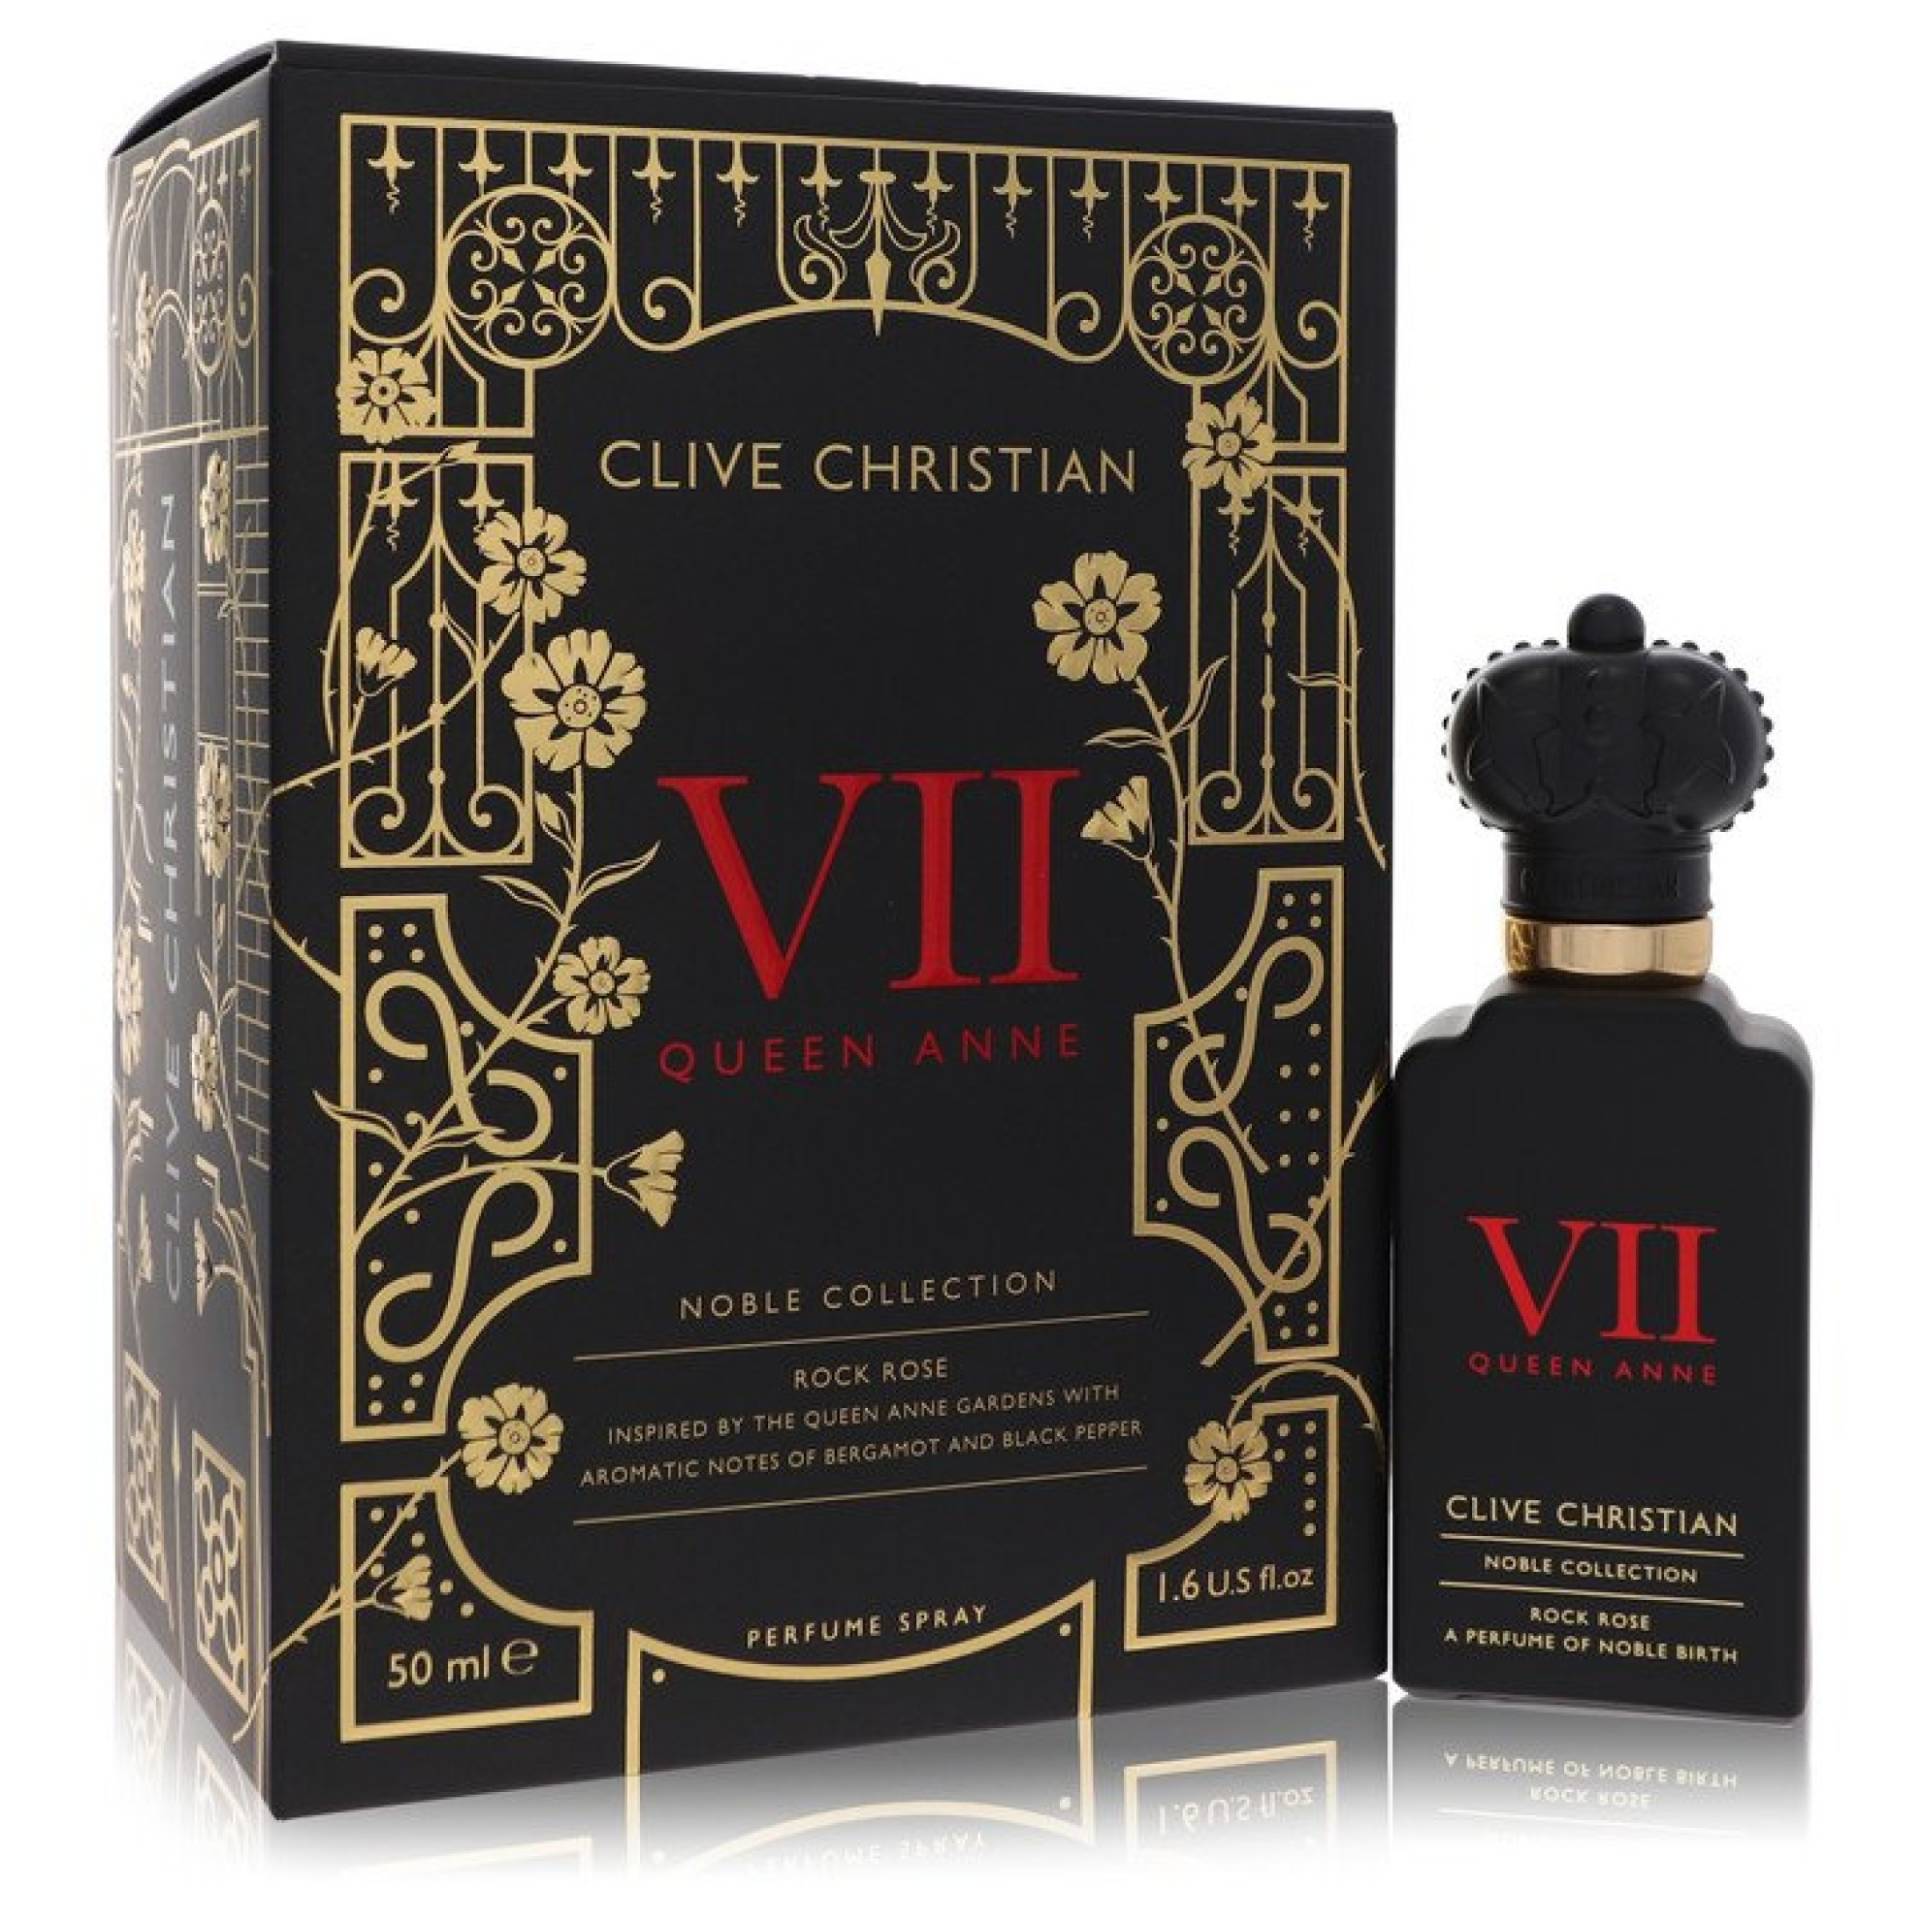 Clive Christian VII Queen Anne Rock Rose Perfume Spray 50 ml von Clive Christian